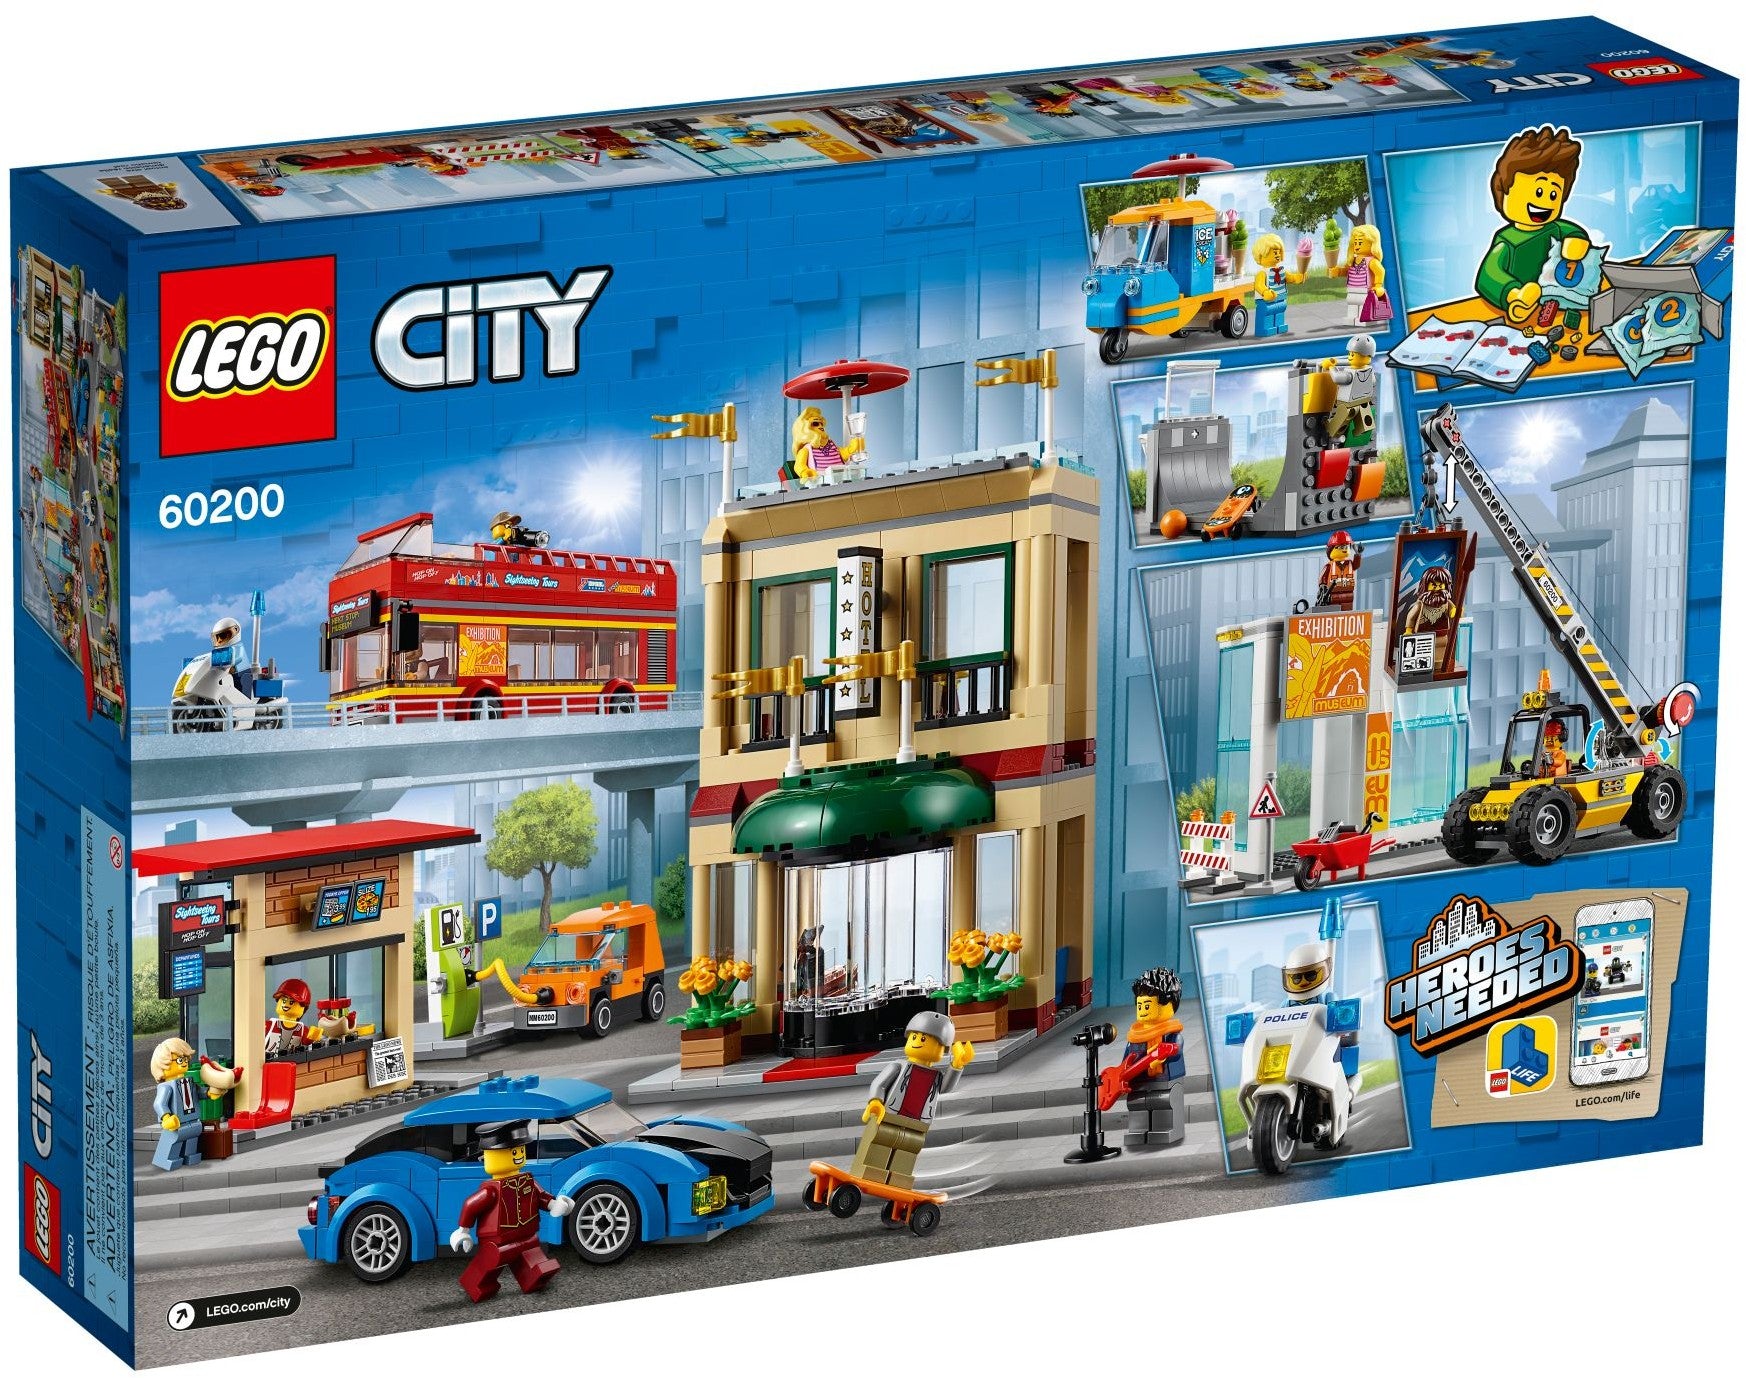 Lego City 60200 - Capital City